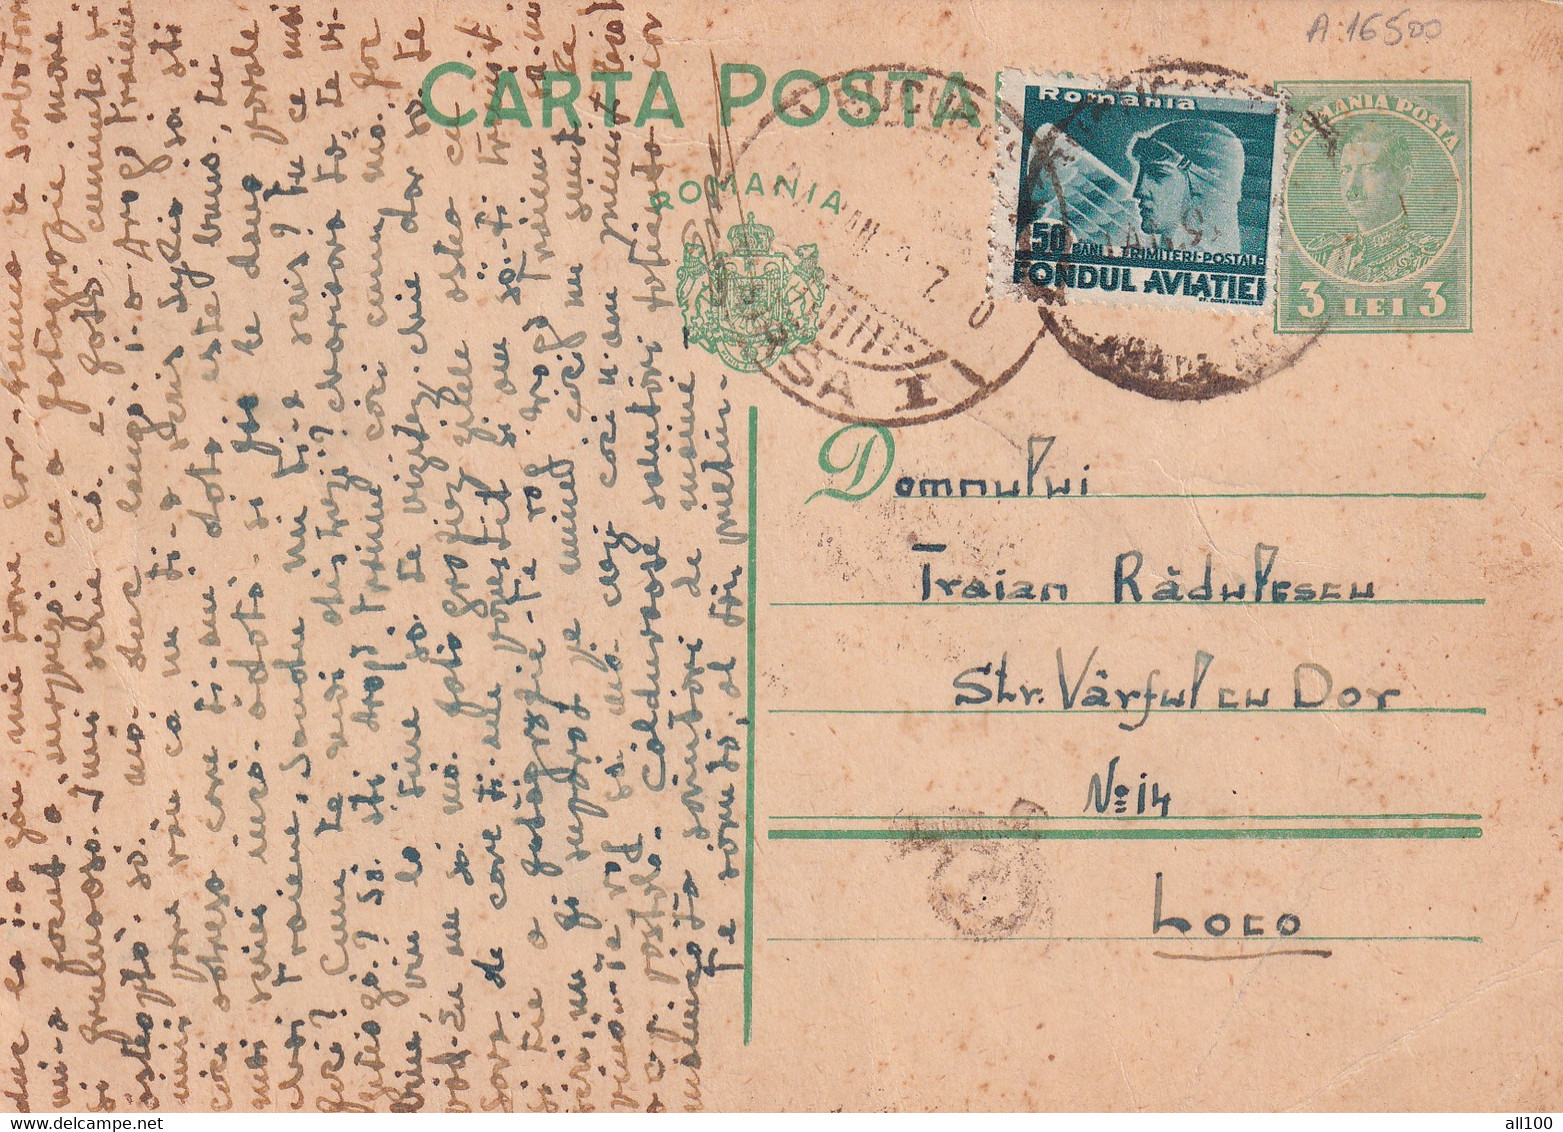 A 16502 - CARTA POSTALA 1932 FROM IASI TO BUCHAREST  KING MICHAEL 3LEI AVIATION STAMP - Storia Postale